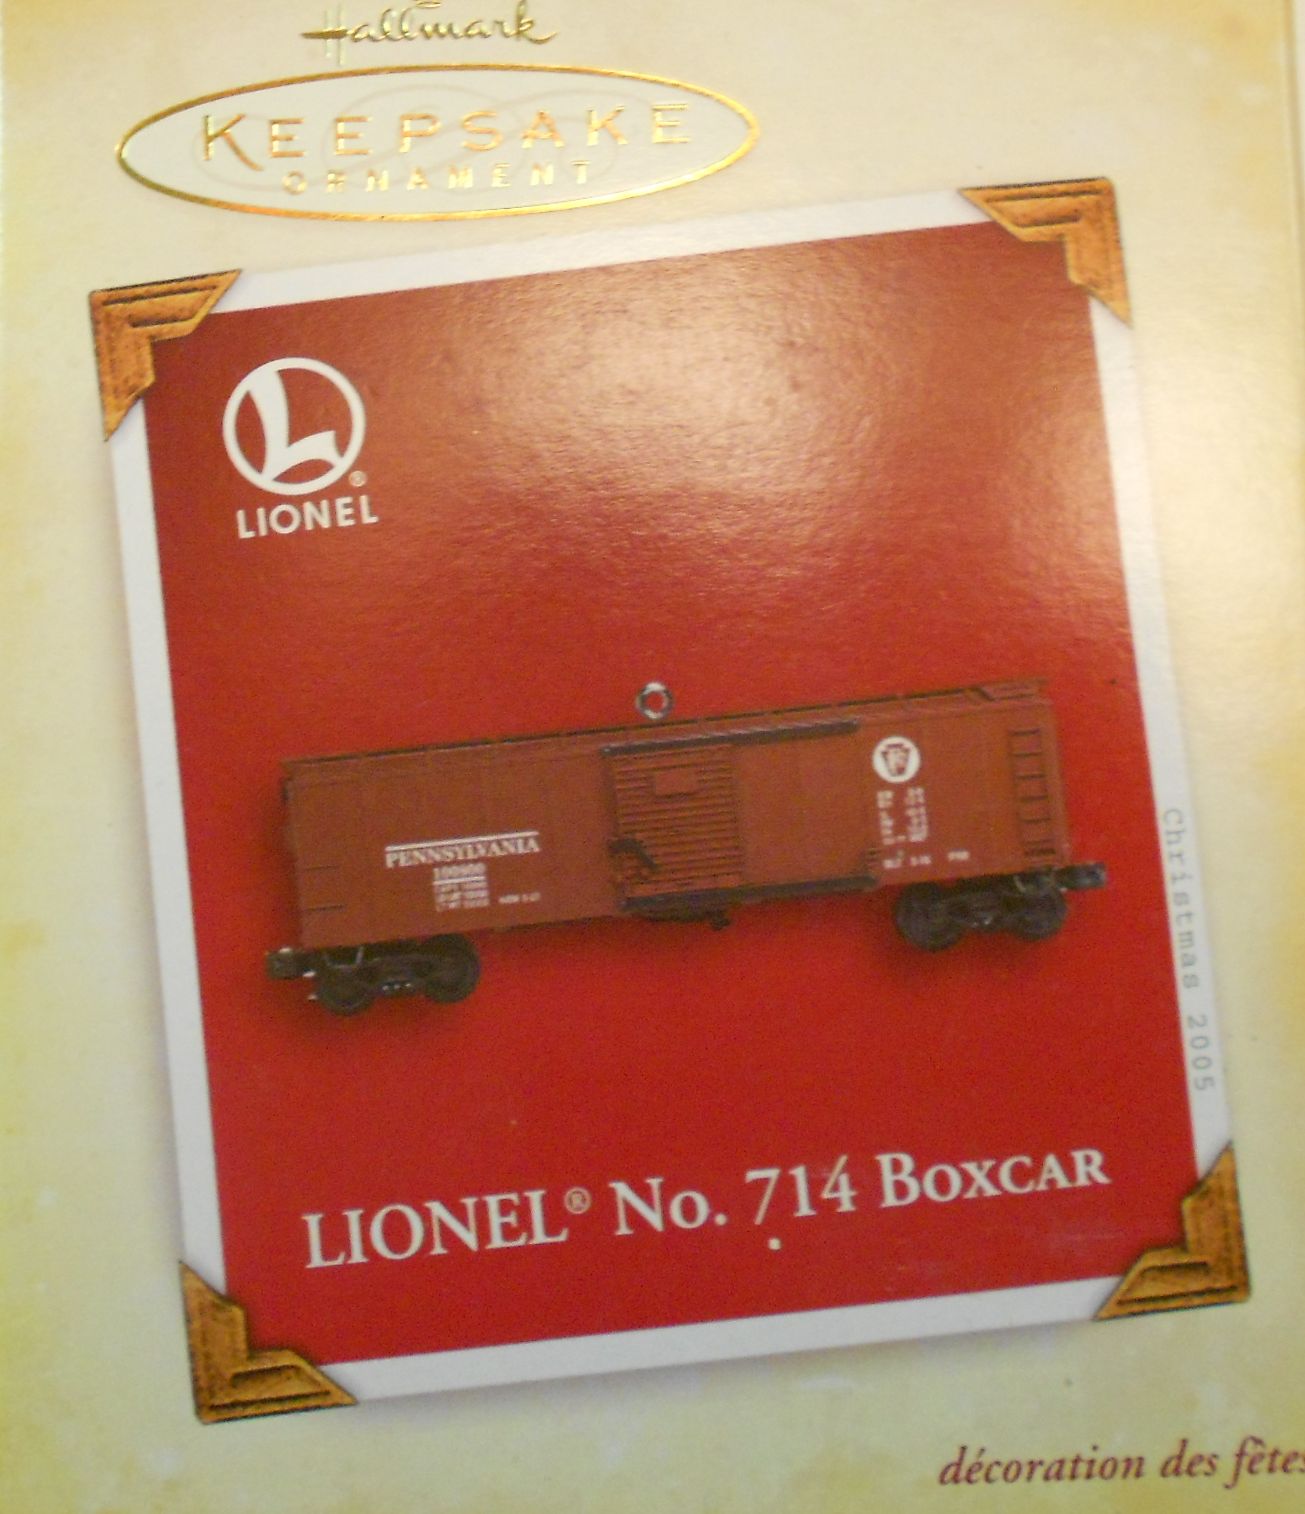 Hallmark QXI6125 Lionel No. 714 Boxcar Christmas Ornament Keepsake